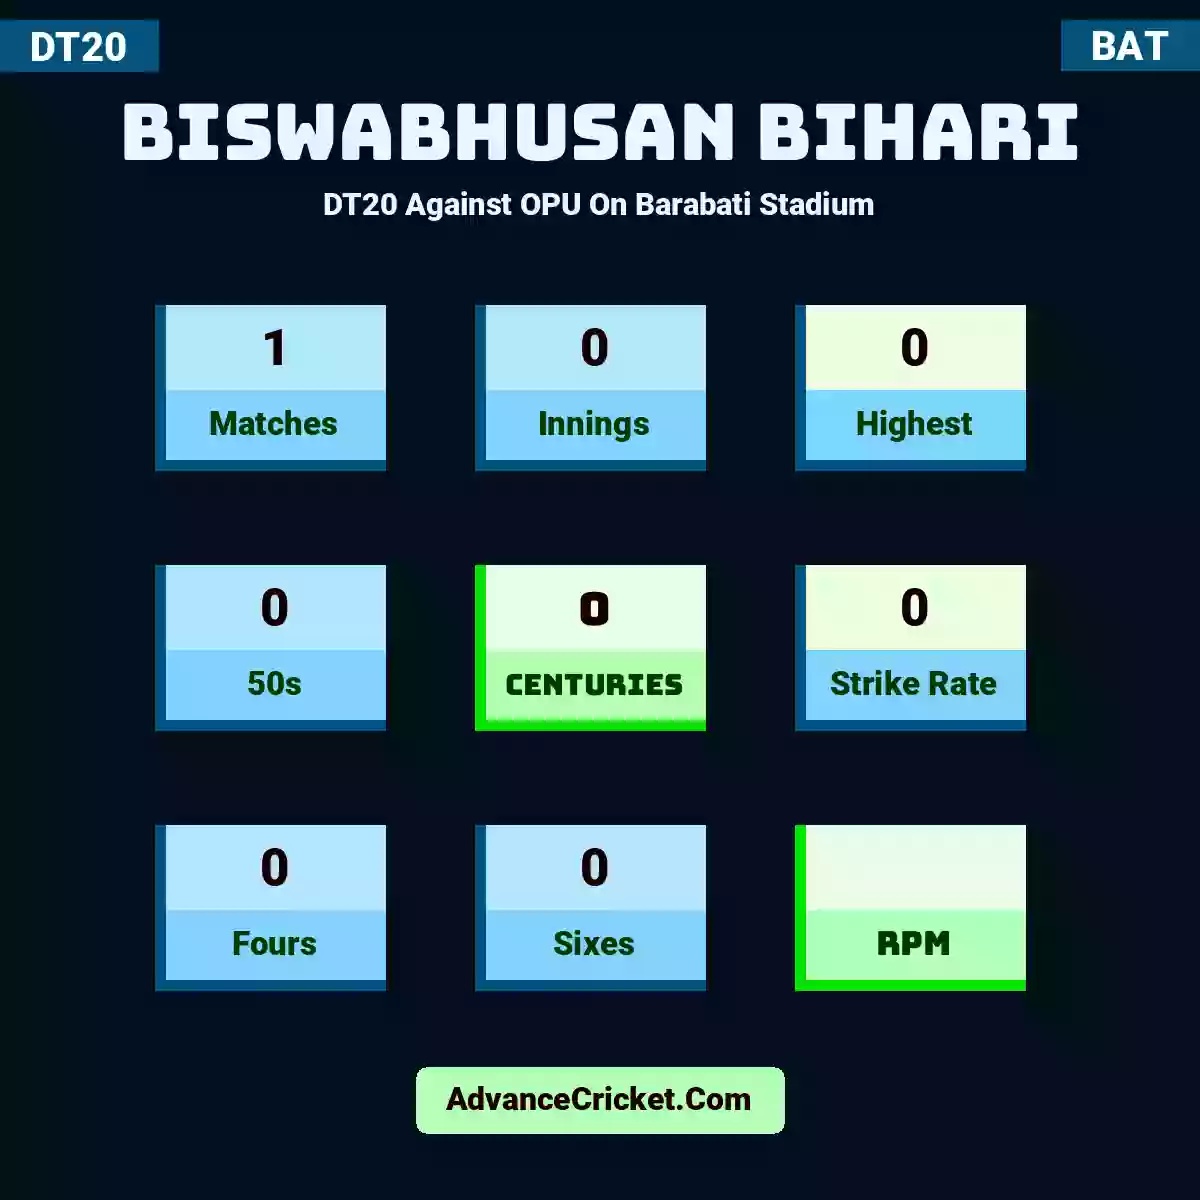 Biswabhusan Bihari DT20  Against OPU On Barabati Stadium, Biswabhusan Bihari played 1 matches, scored 0 runs as highest, 0 half-centuries, and 0 centuries, with a strike rate of 0. B.Bihari hit 0 fours and 0 sixes.